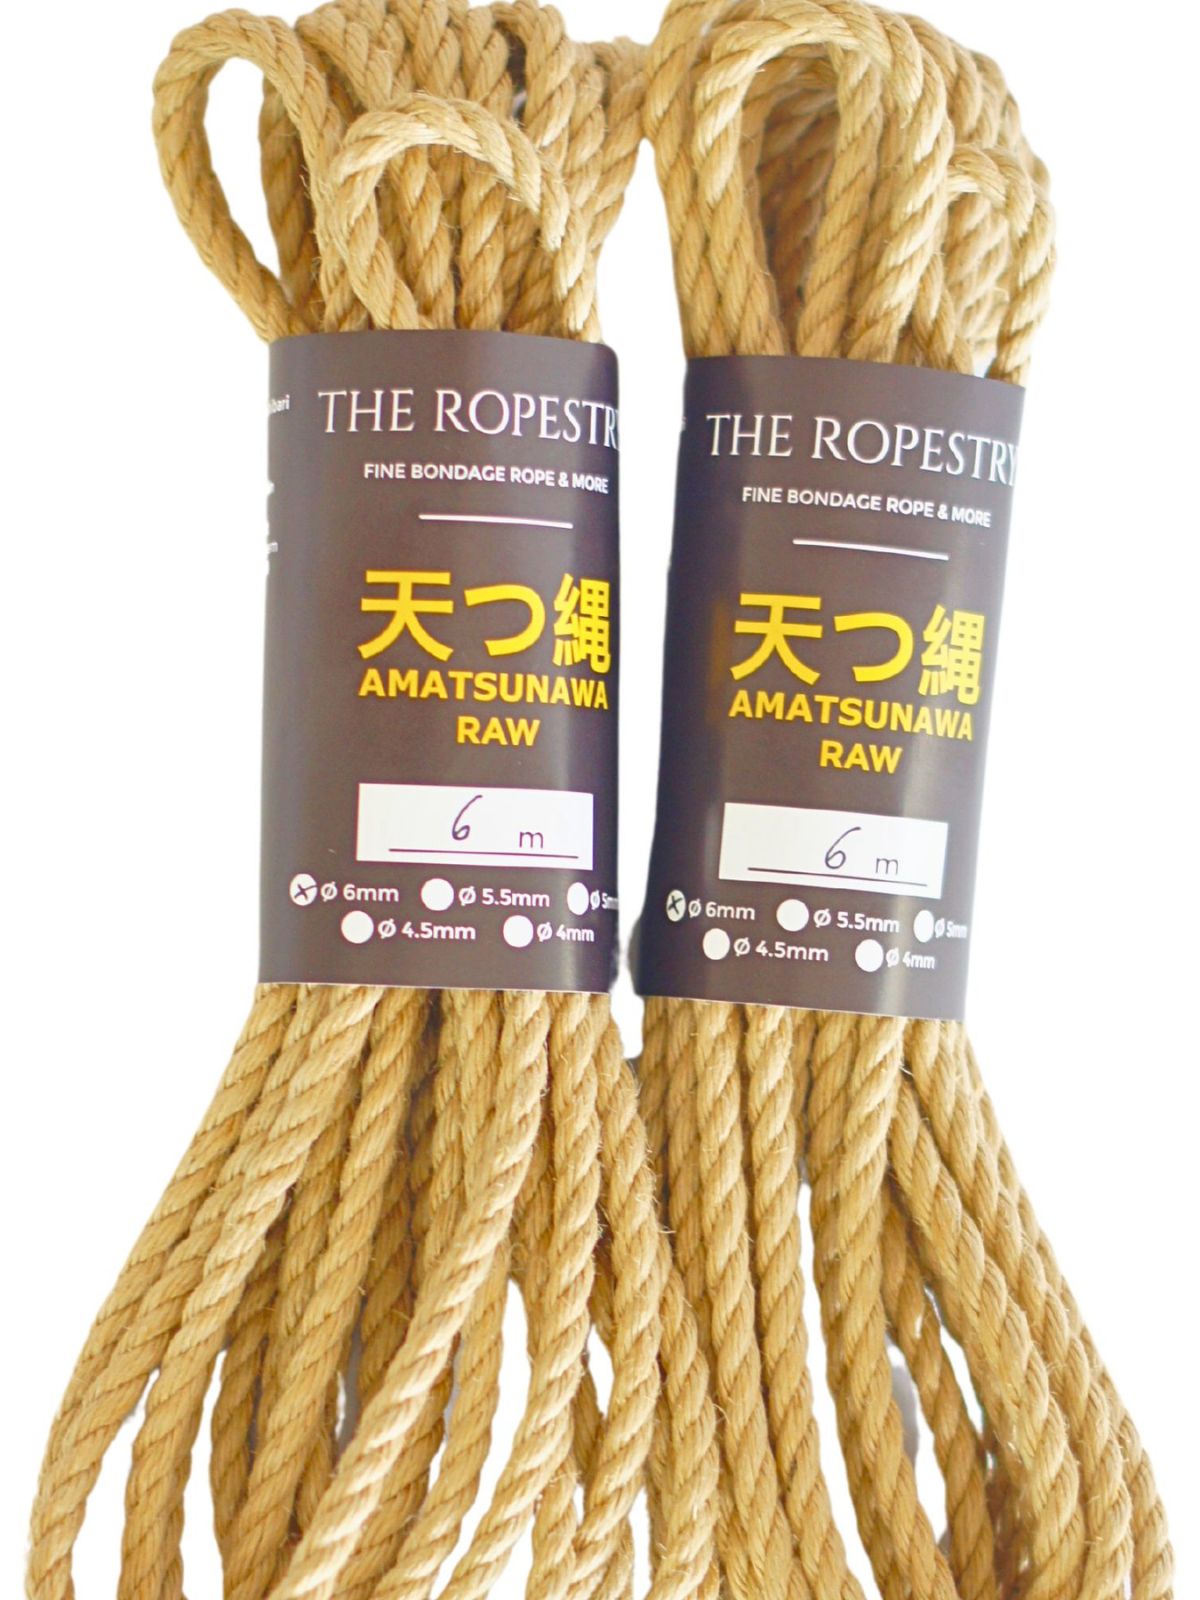 ø 6mm RAW AMATSUNAWA 6/0 jute rope for Shibari, Kinbaku bondage, untreated, chemical free